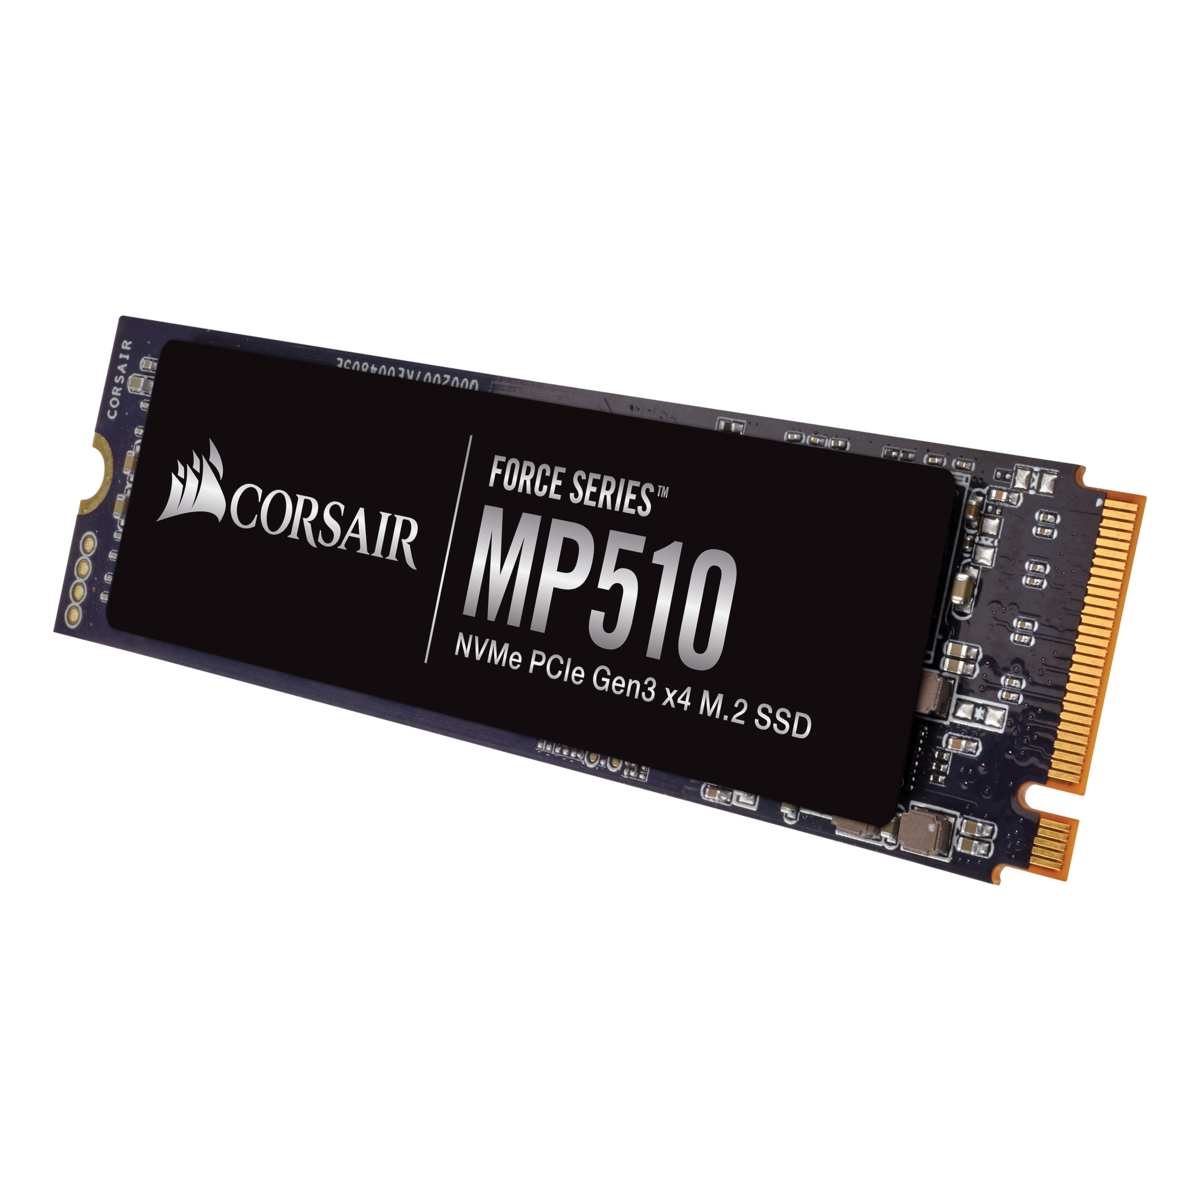 CORSAIR Force MP510 NVMe PCIe Gen3 x4  240GB M.2 SSD